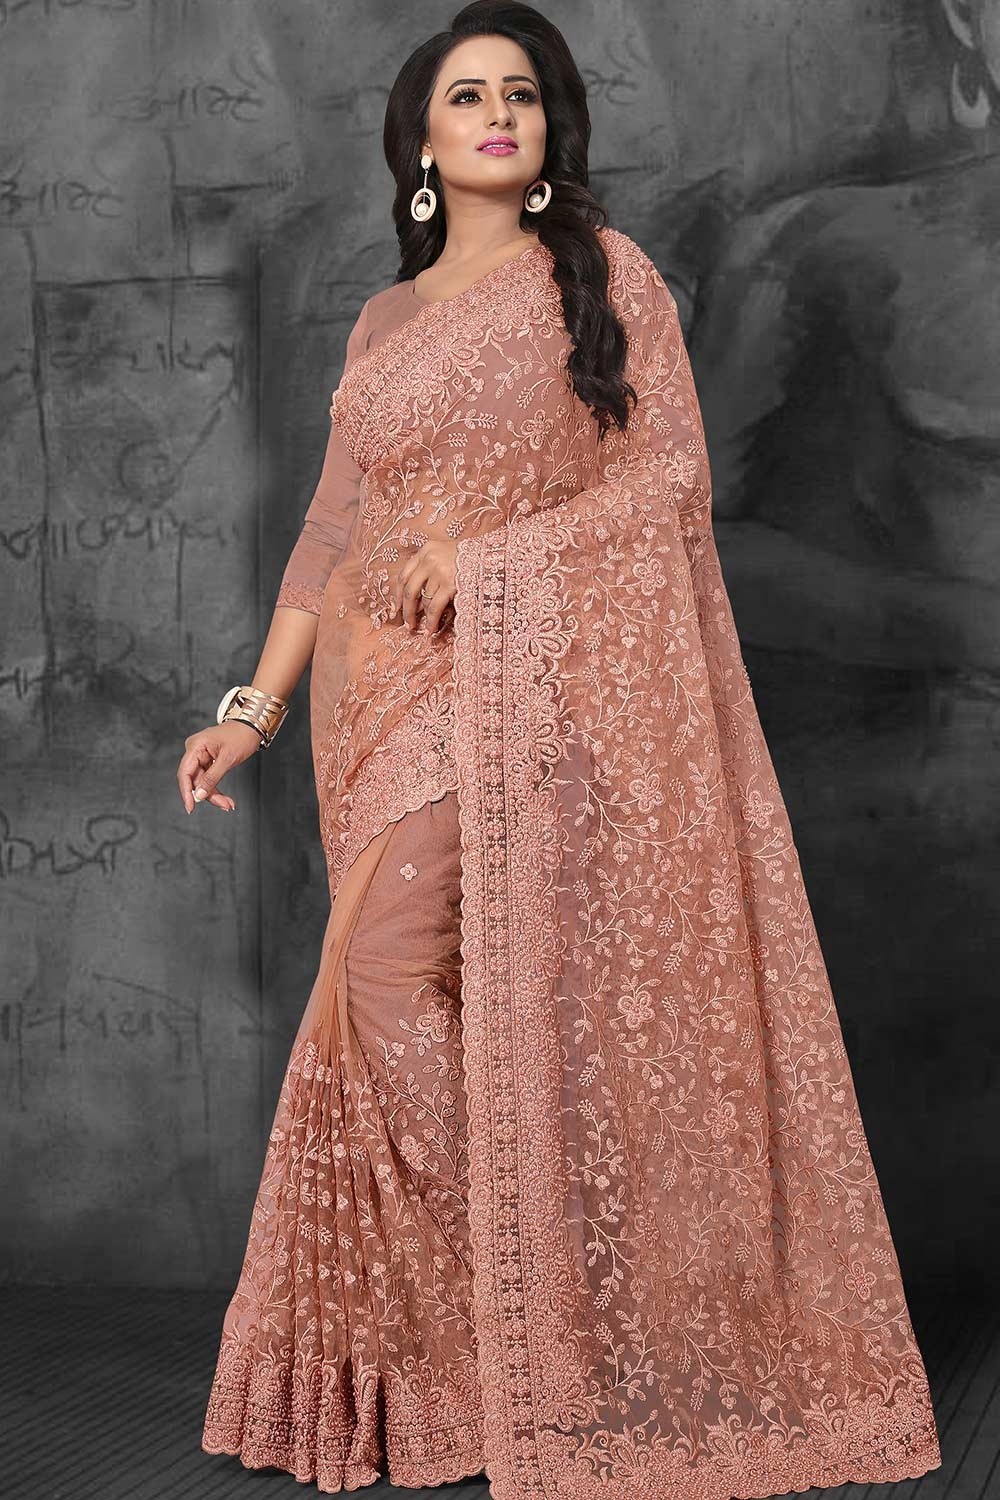 Wedding season is Saree season 😄 #sareelook @organzasaree #pink  #weddingbells Outfit n jewelry my own ☺️ Make up did it myself �... |  Instagram